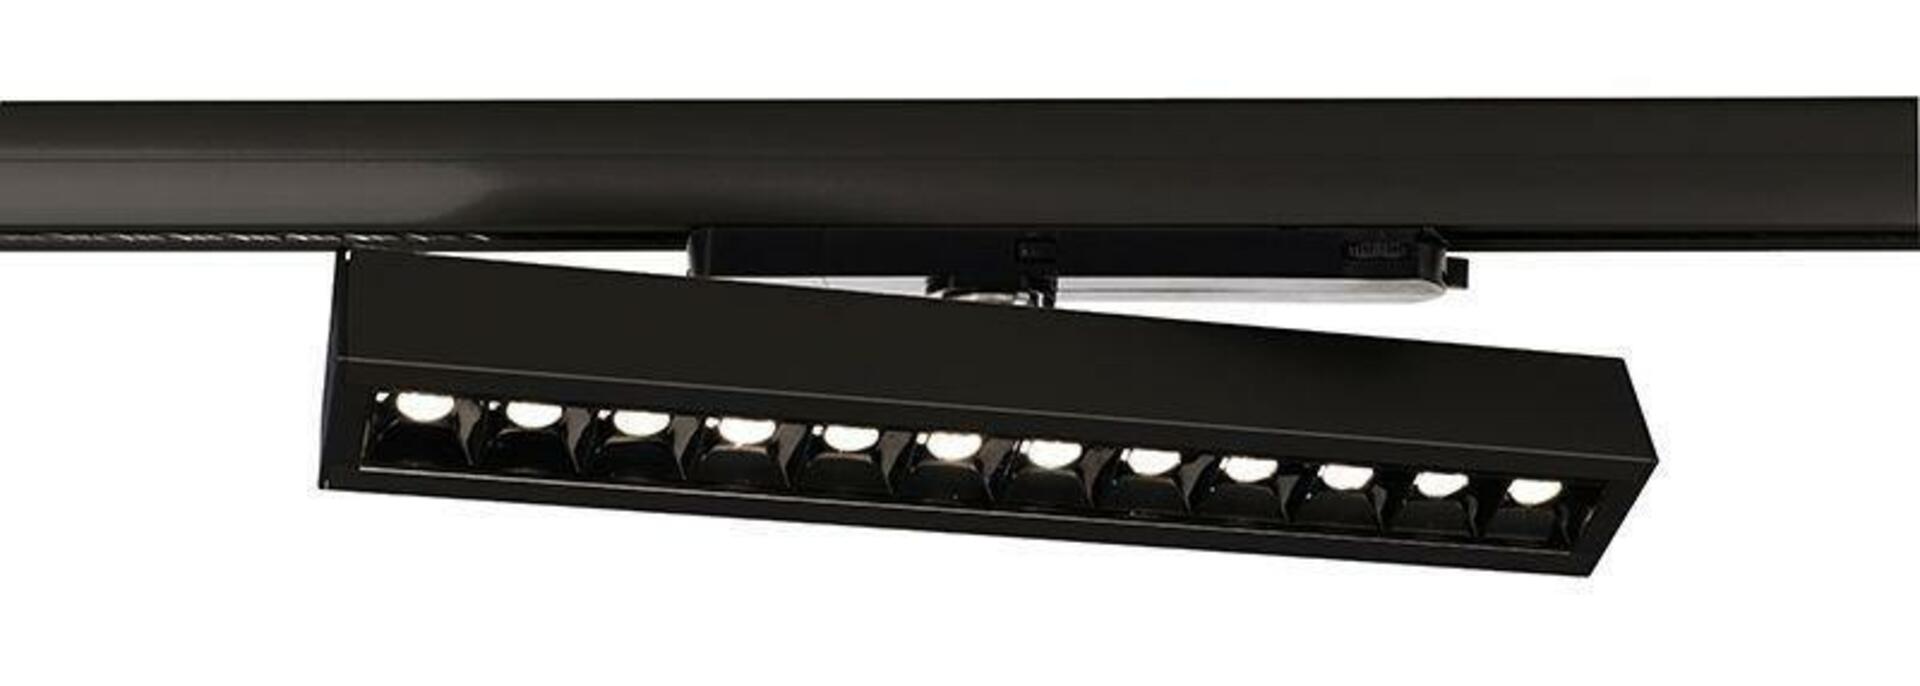 Light Impressions Deko-Light kolejnicový systém 3-fázový 230V Alnitak 25-34W, 4000K 220-240V AC/50-60Hz 34,00 W 4000 K černá 336 mm 707115